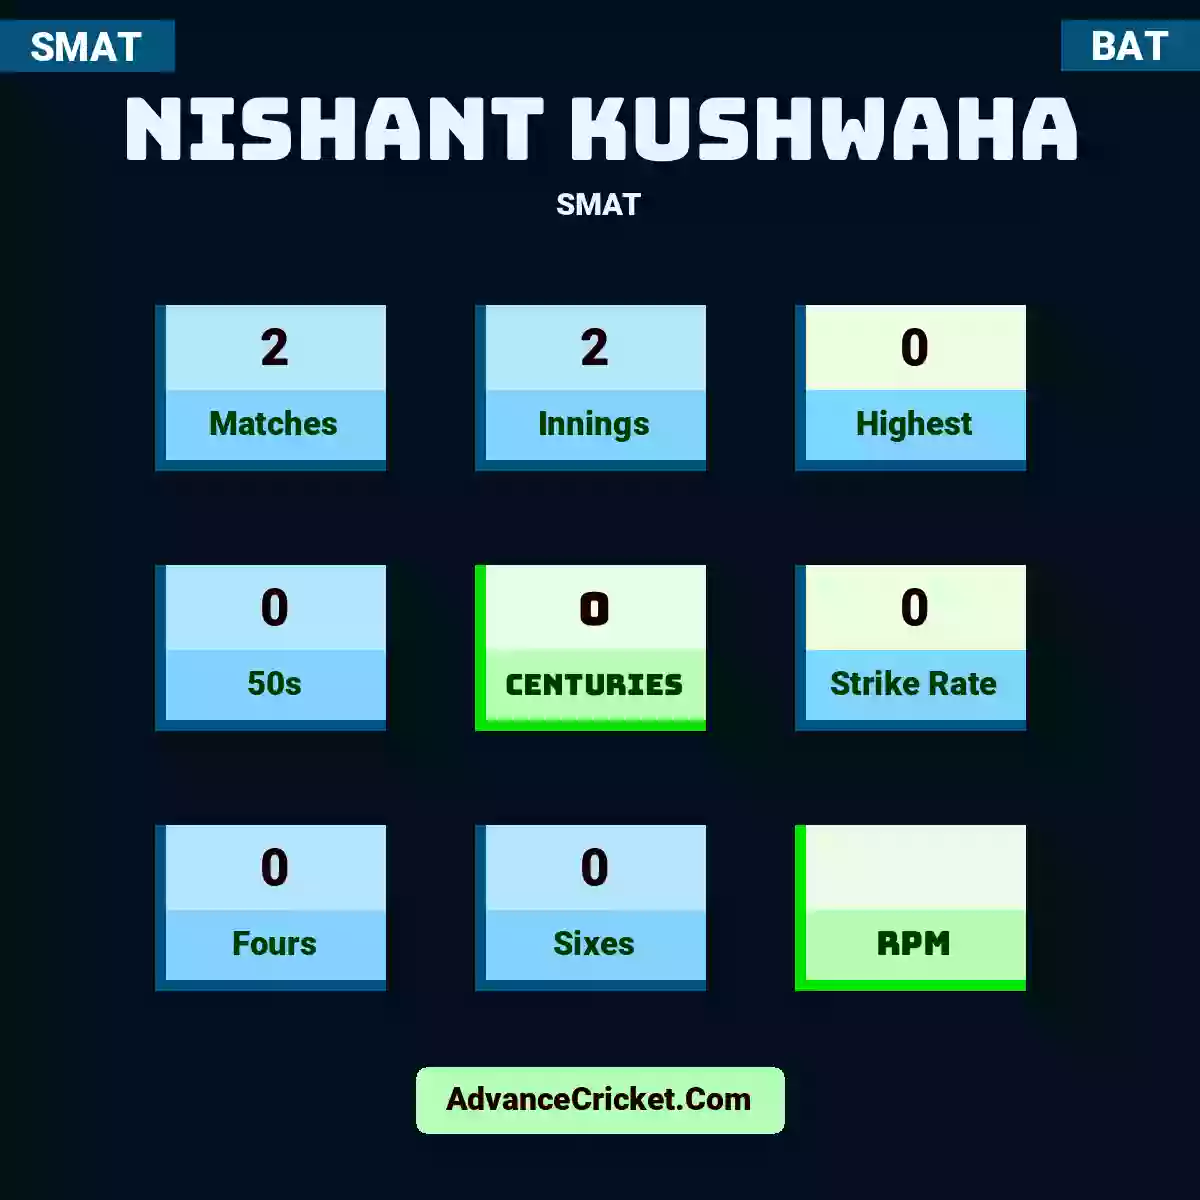 Nishant Kushwaha SMAT , Nishant Kushwaha played 2 matches, scored 0 runs as highest, 0 half-centuries, and 0 centuries, with a strike rate of 0. N.Kushwaha hit 0 fours and 0 sixes.